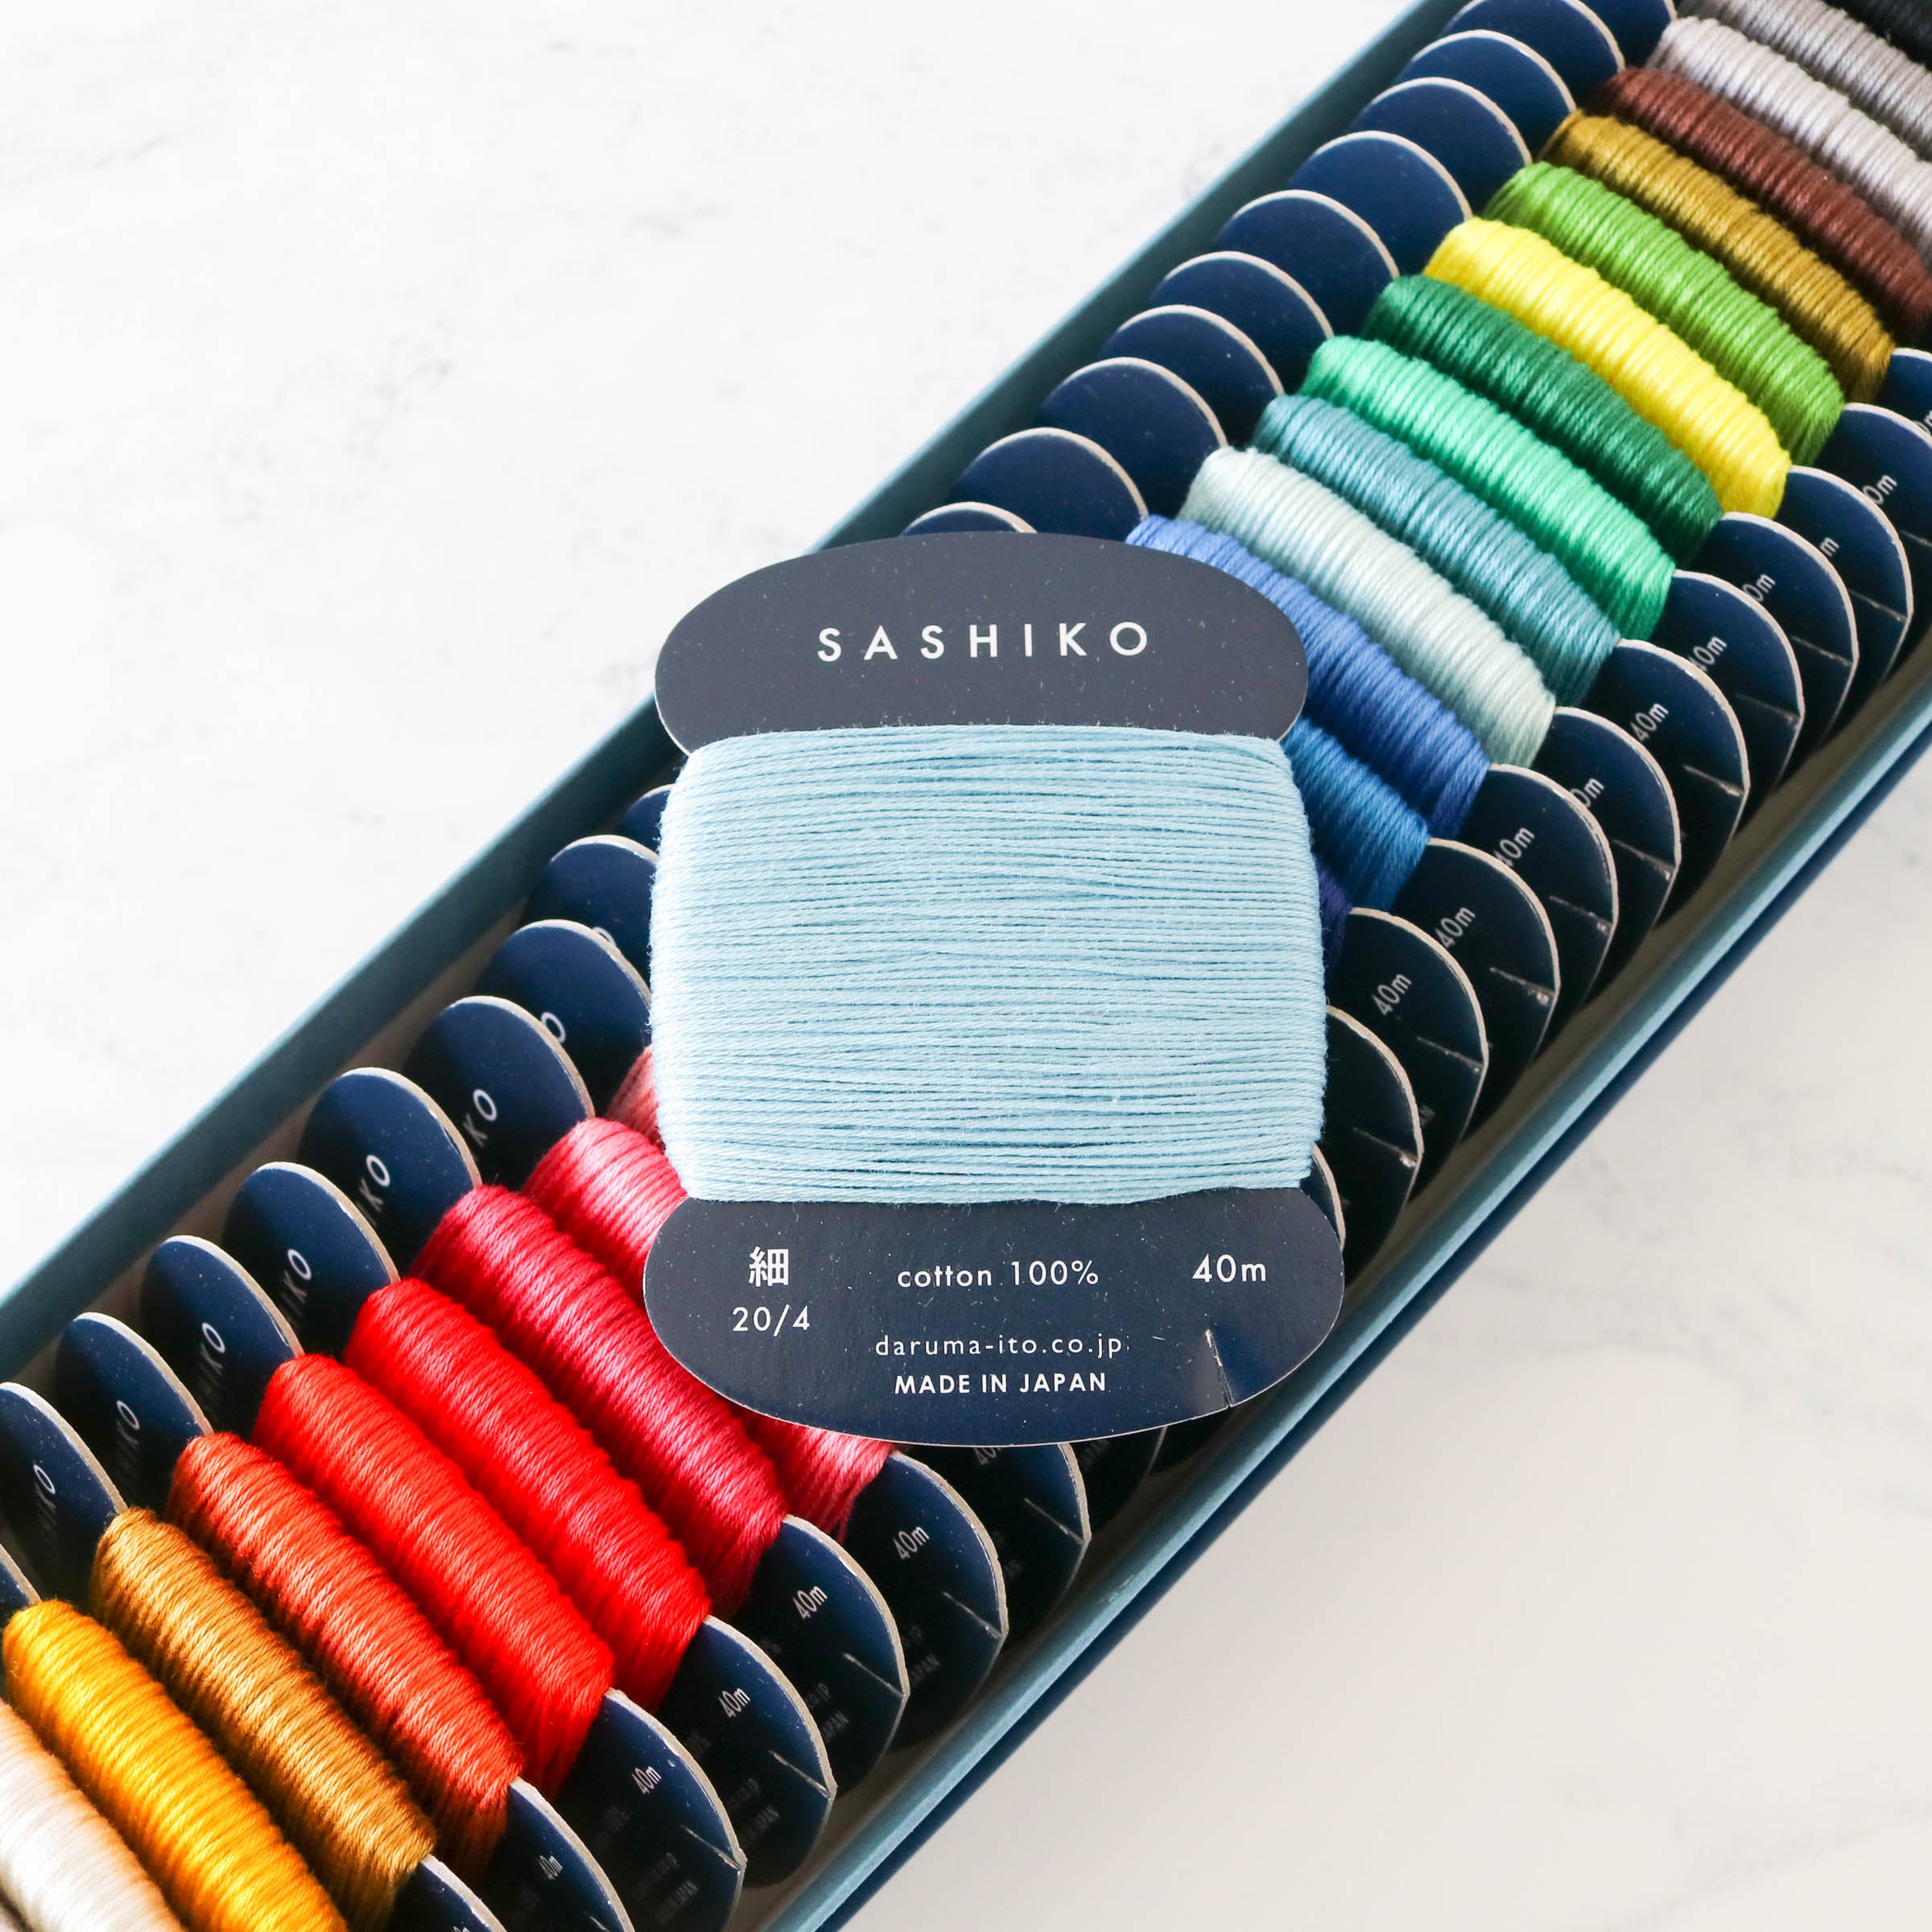 Sashiko Thread Boxed Set - Stitched Modern